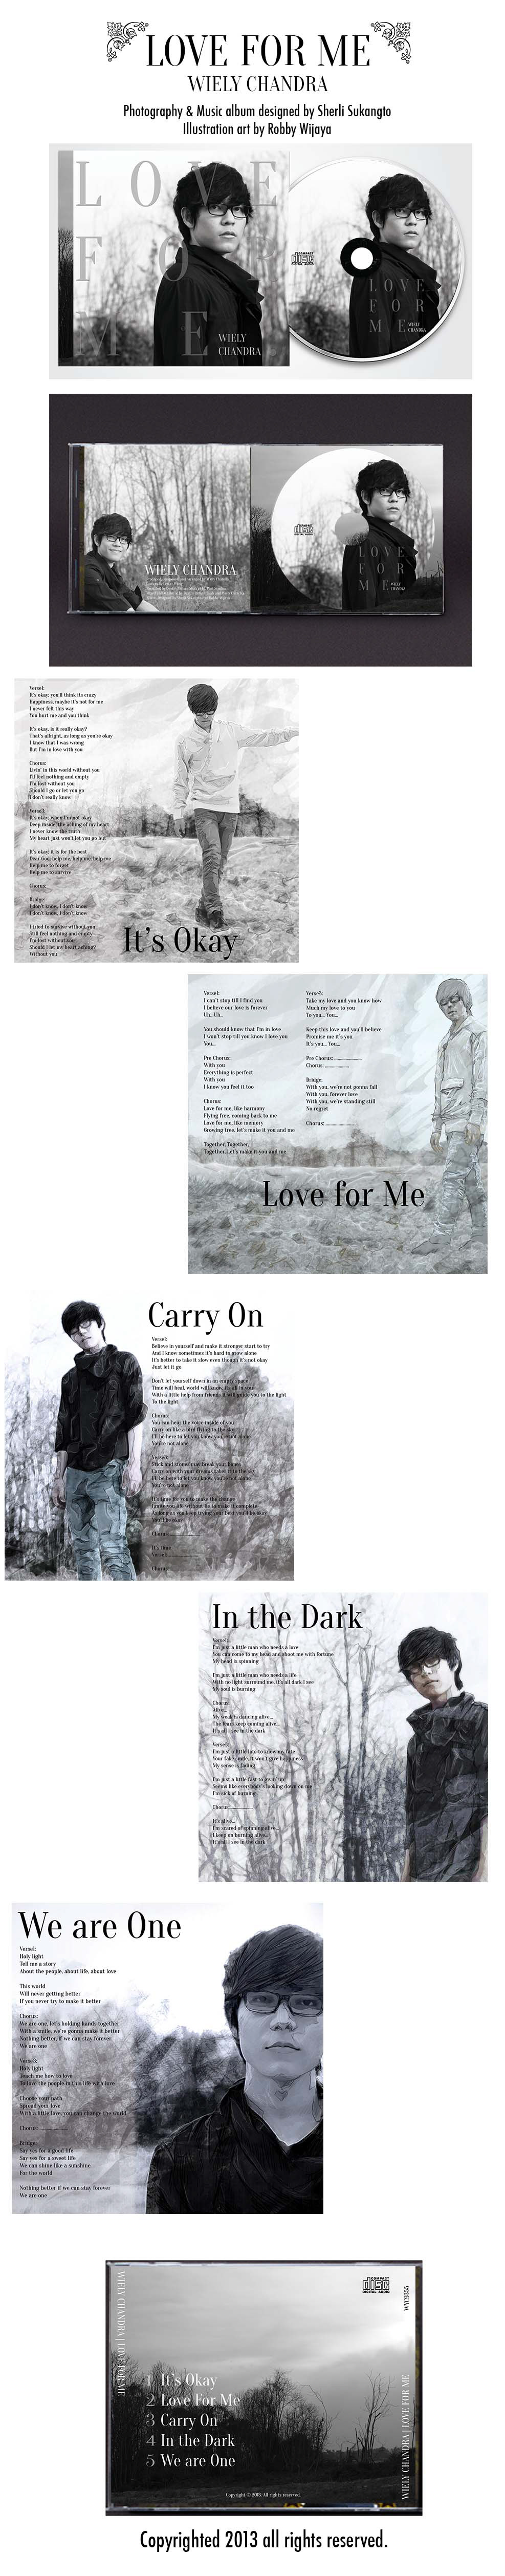 Album  design  cover song dark black and white photograph